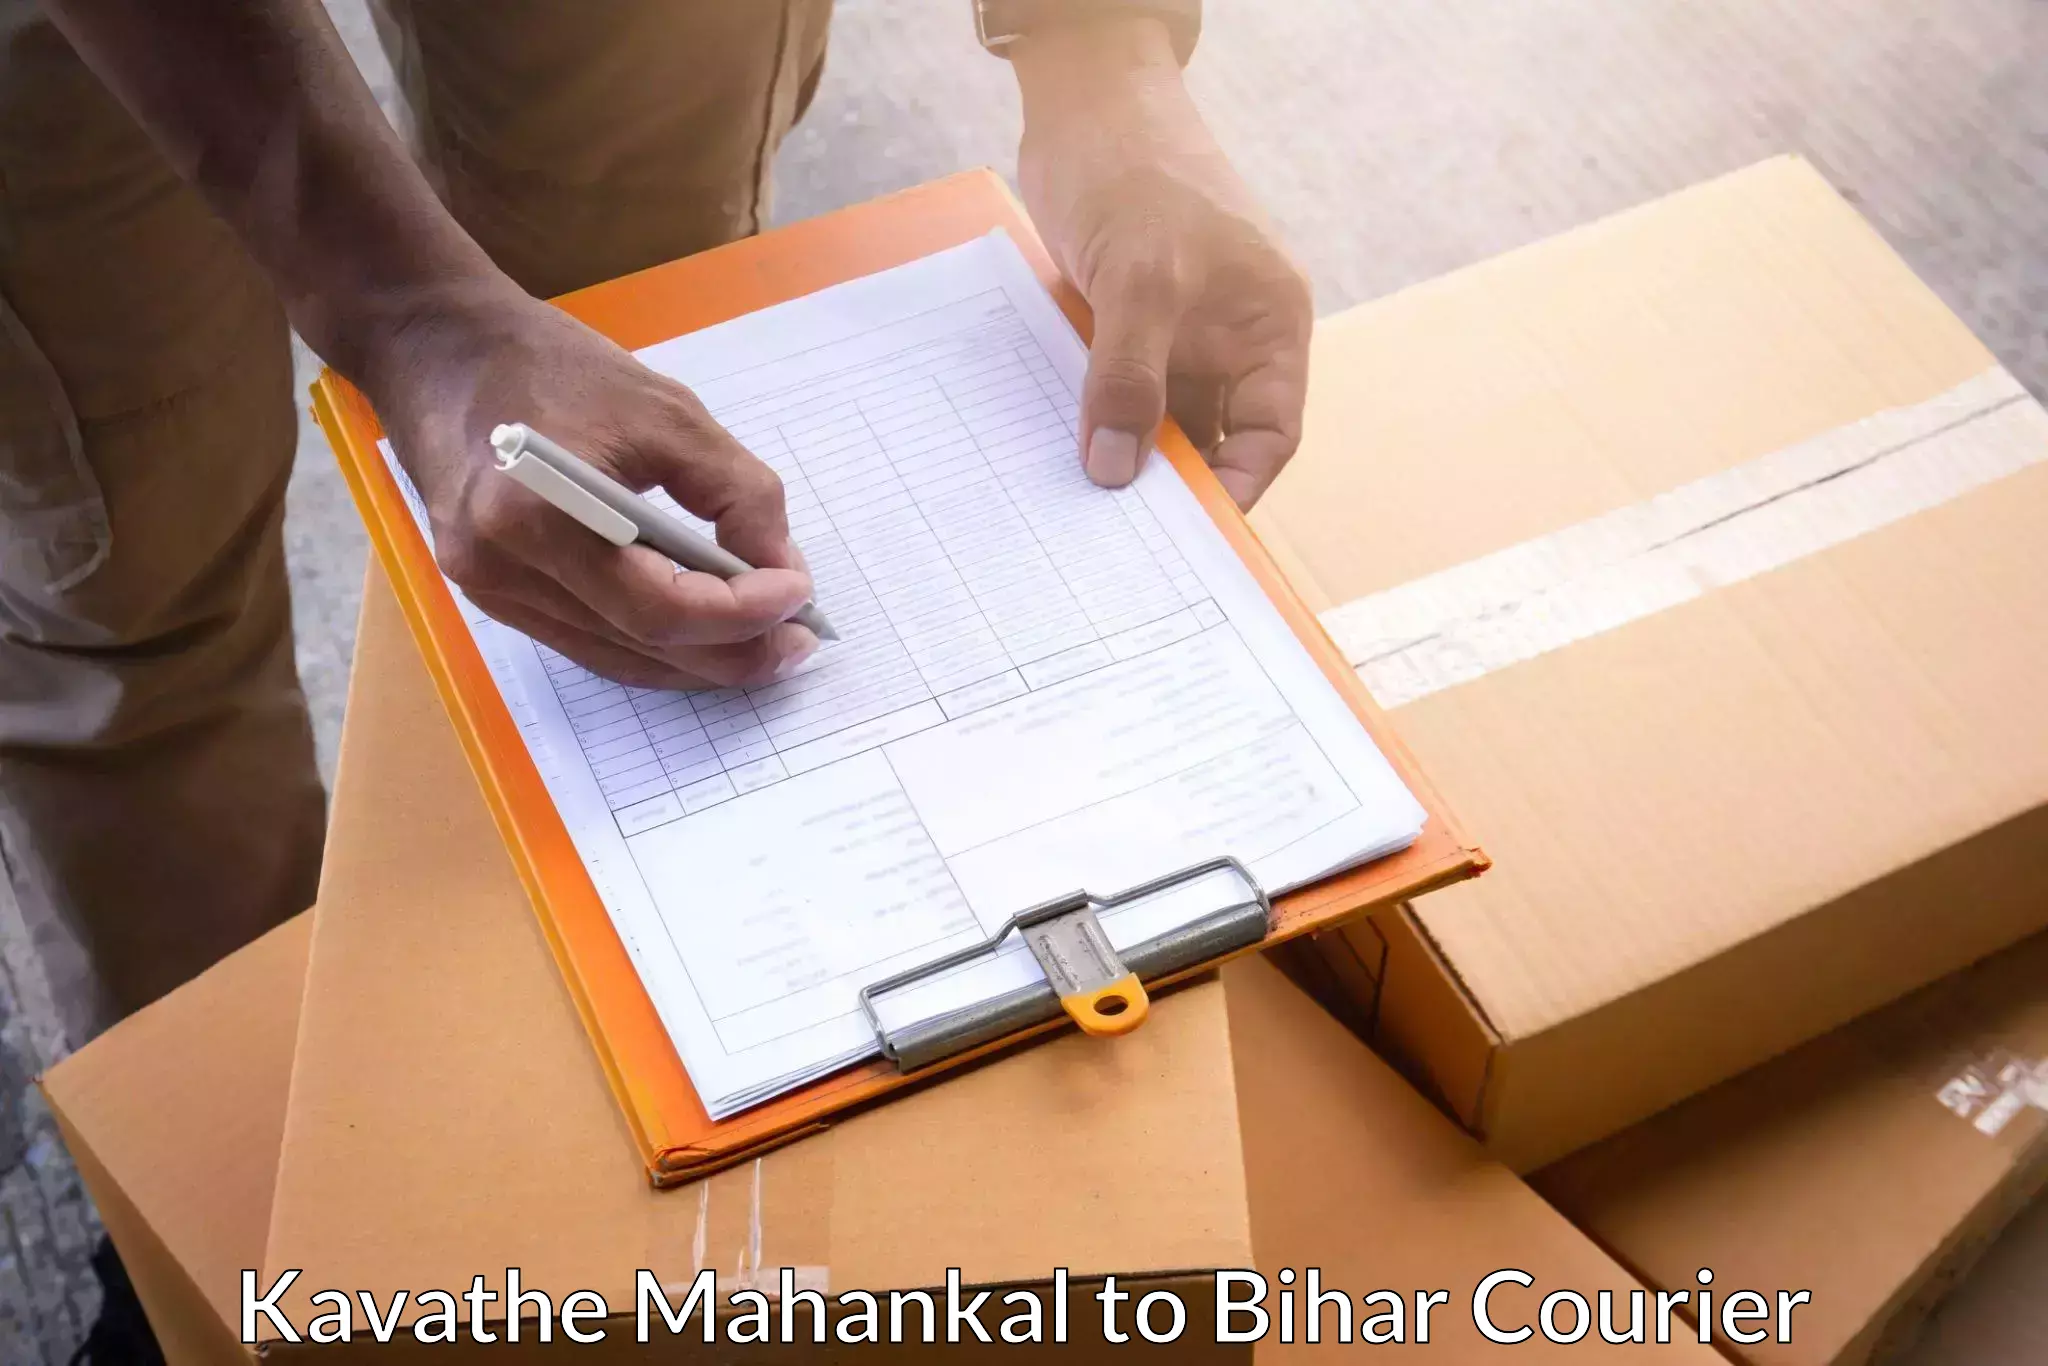 Bulk shipping discounts Kavathe Mahankal to Vaishali